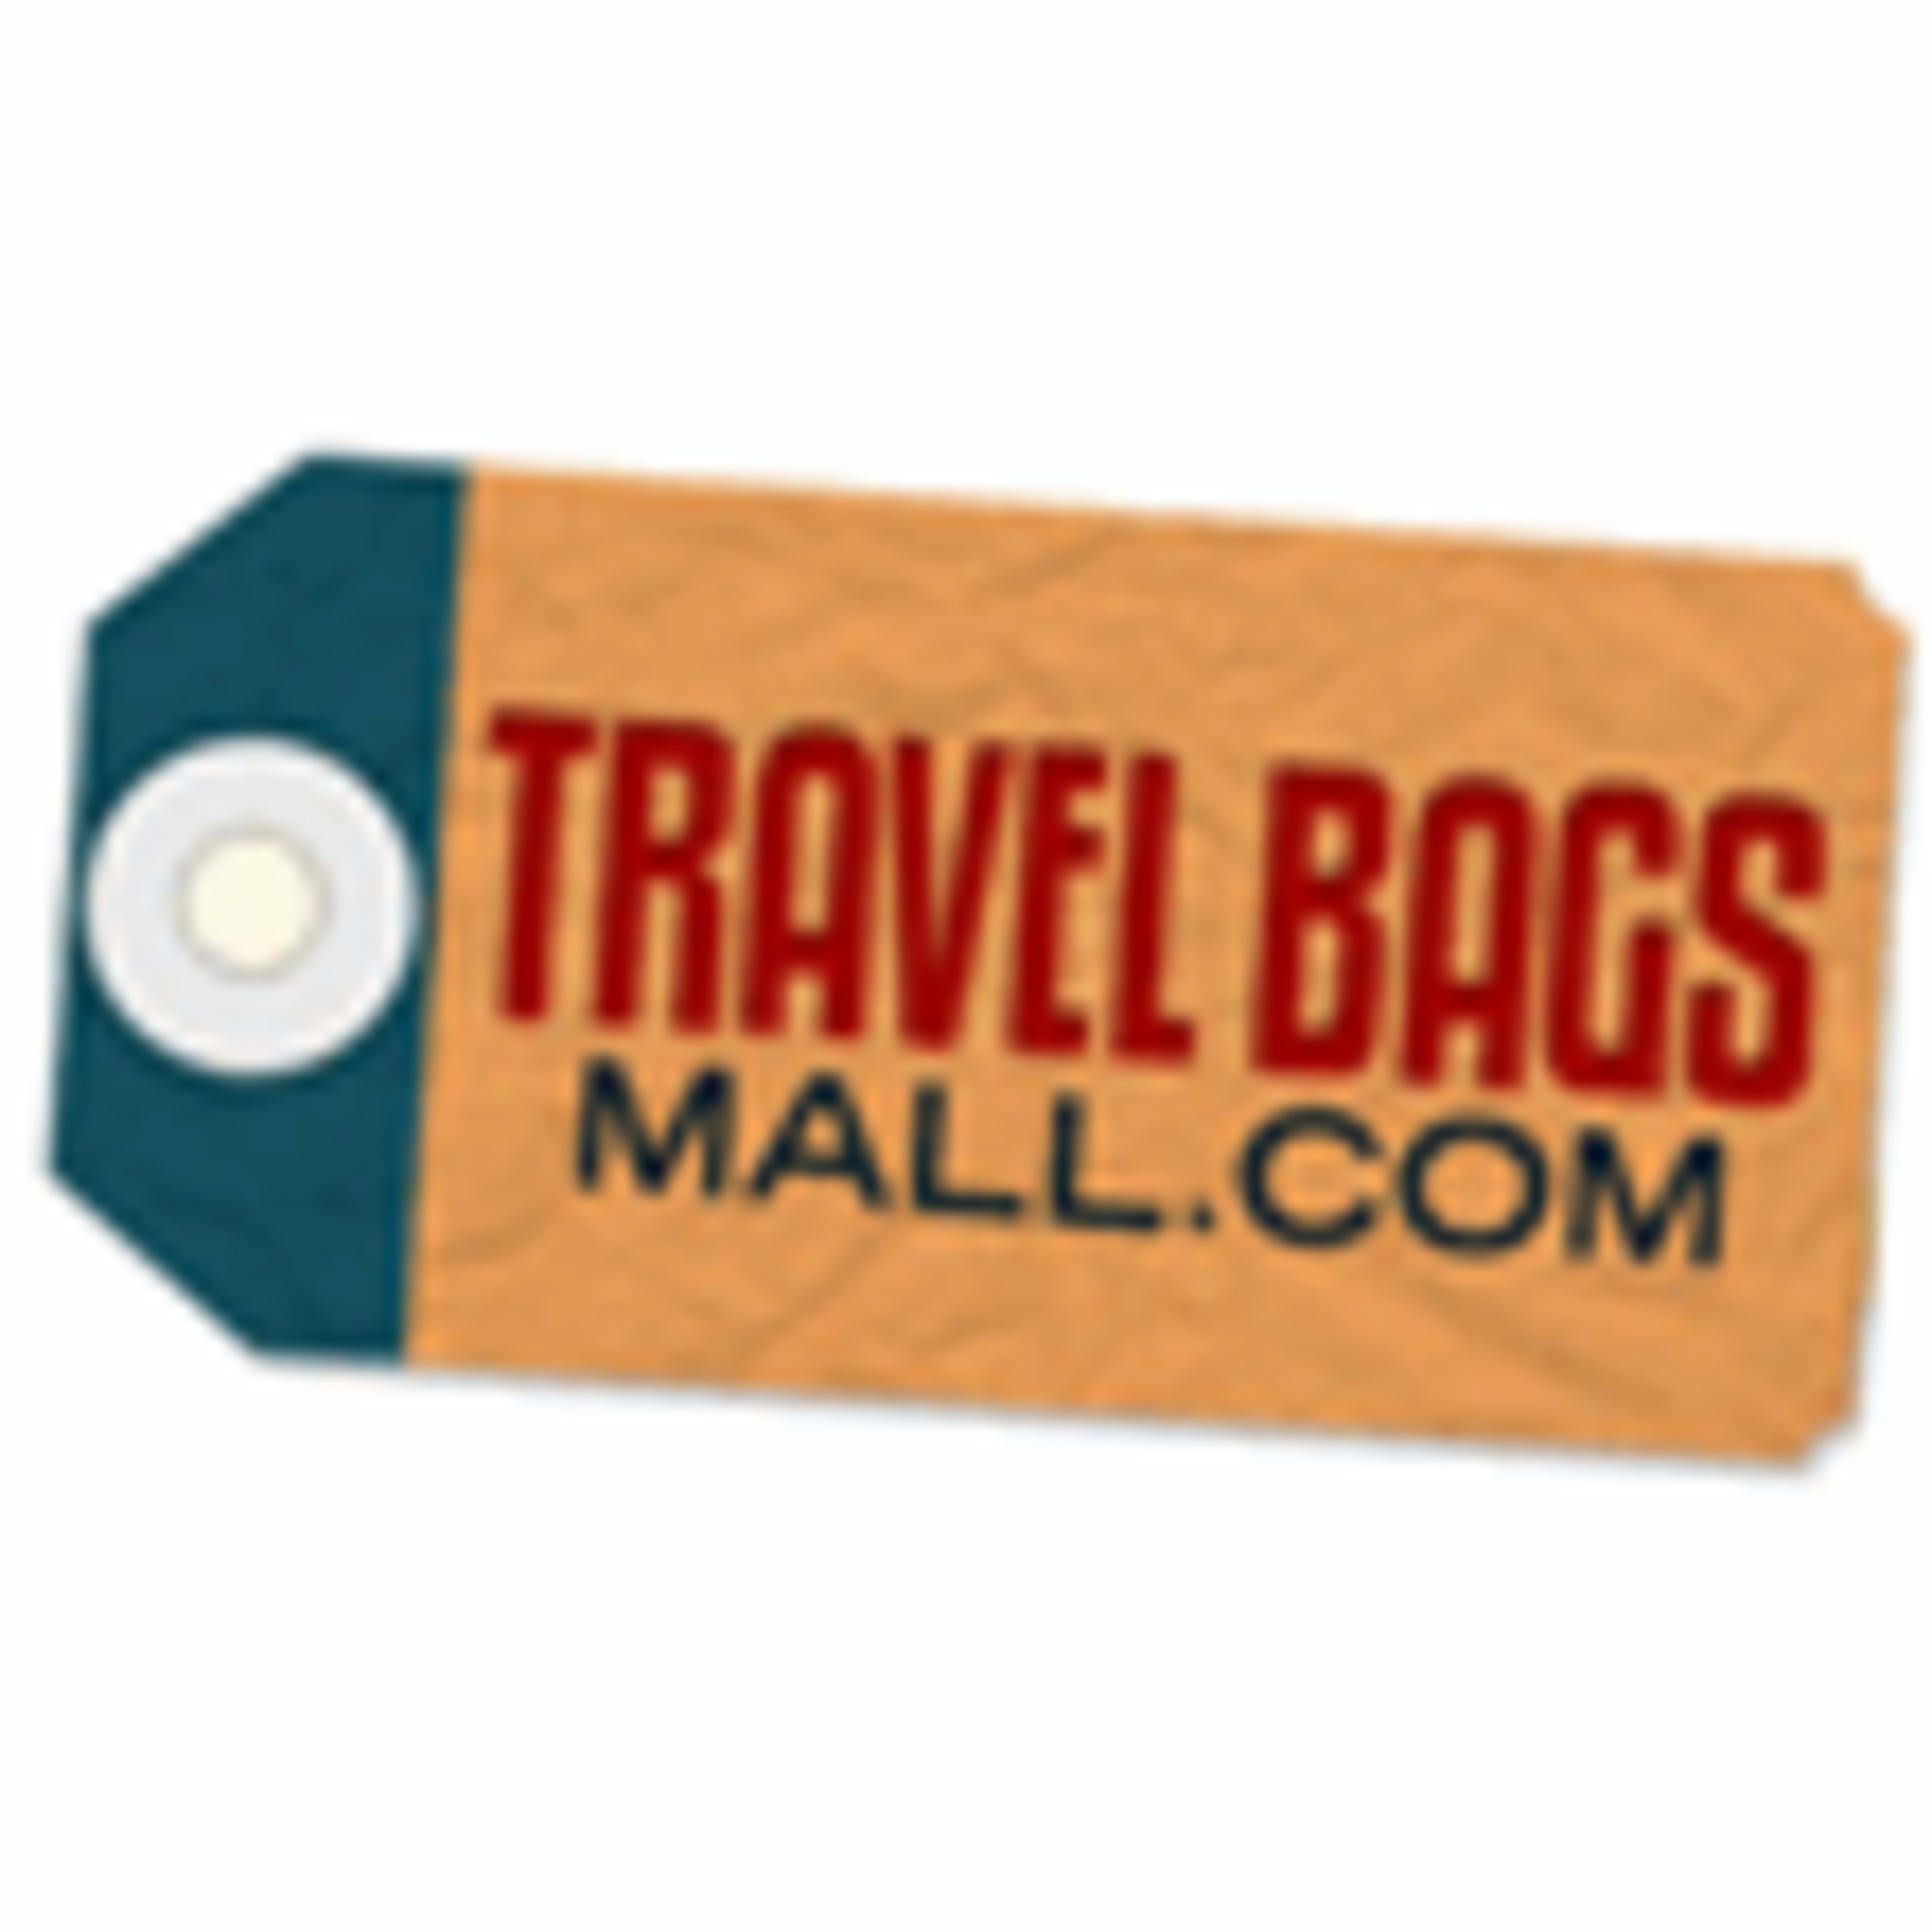 Travel Bags MallCode